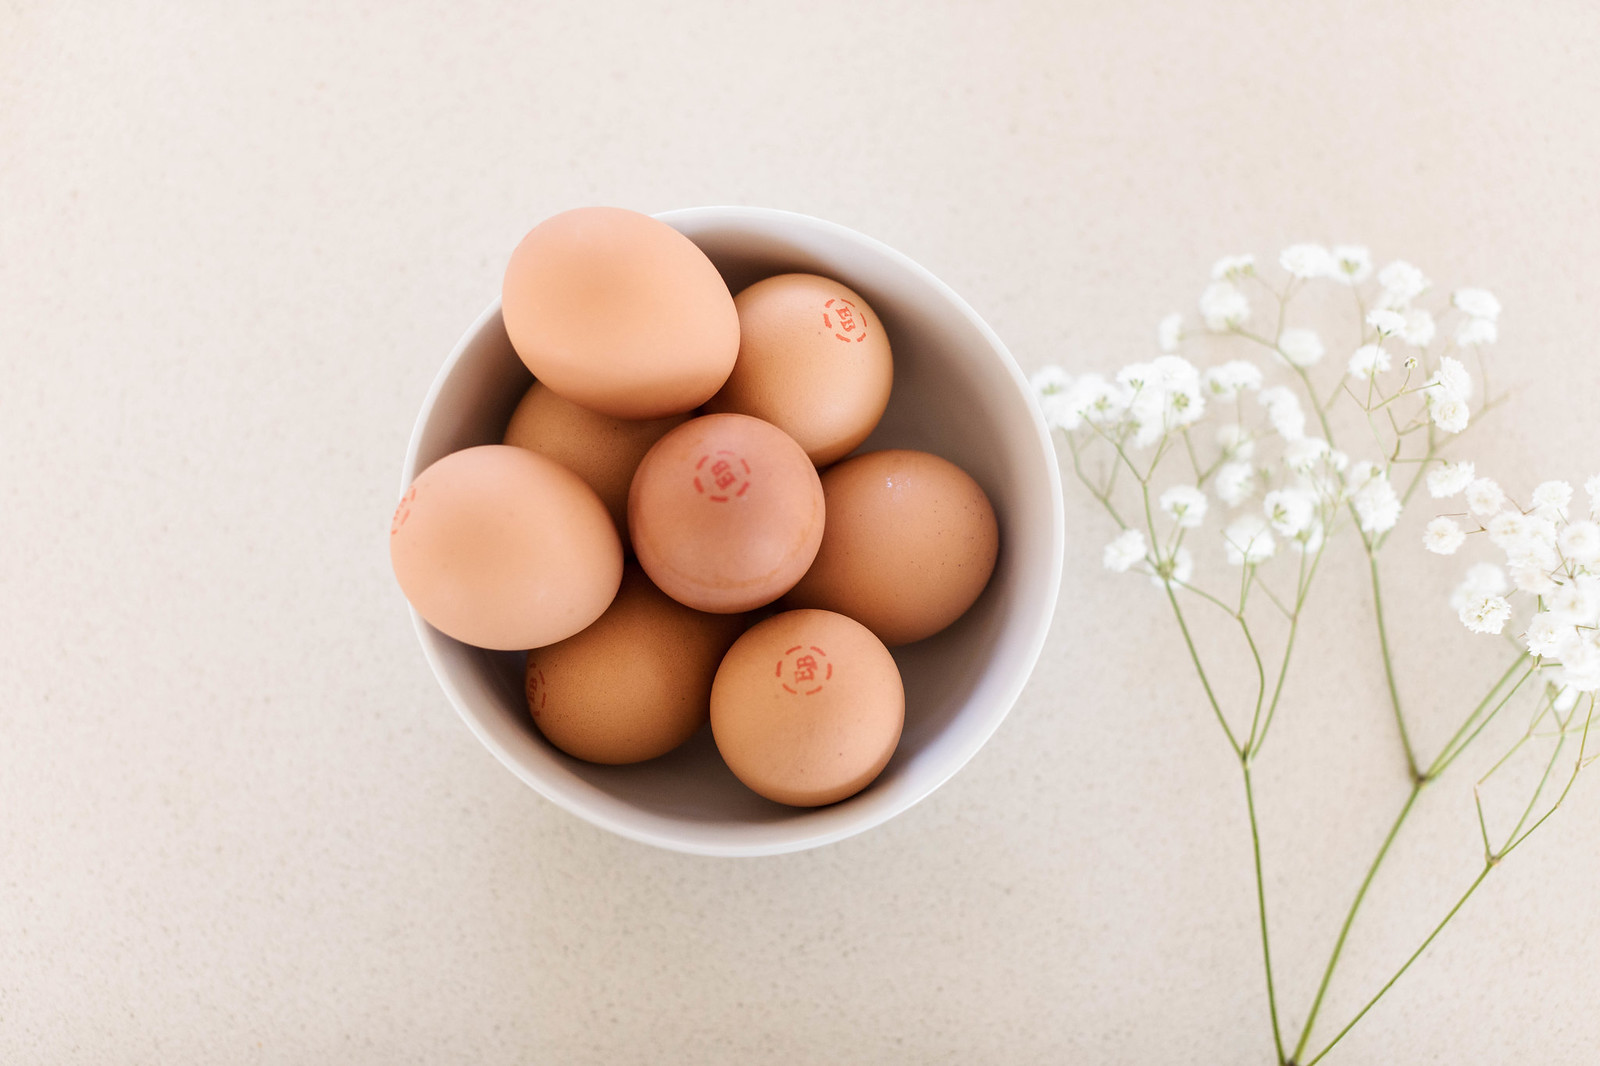 How to poach eggs on http://juliettelaura.blogspot.com/